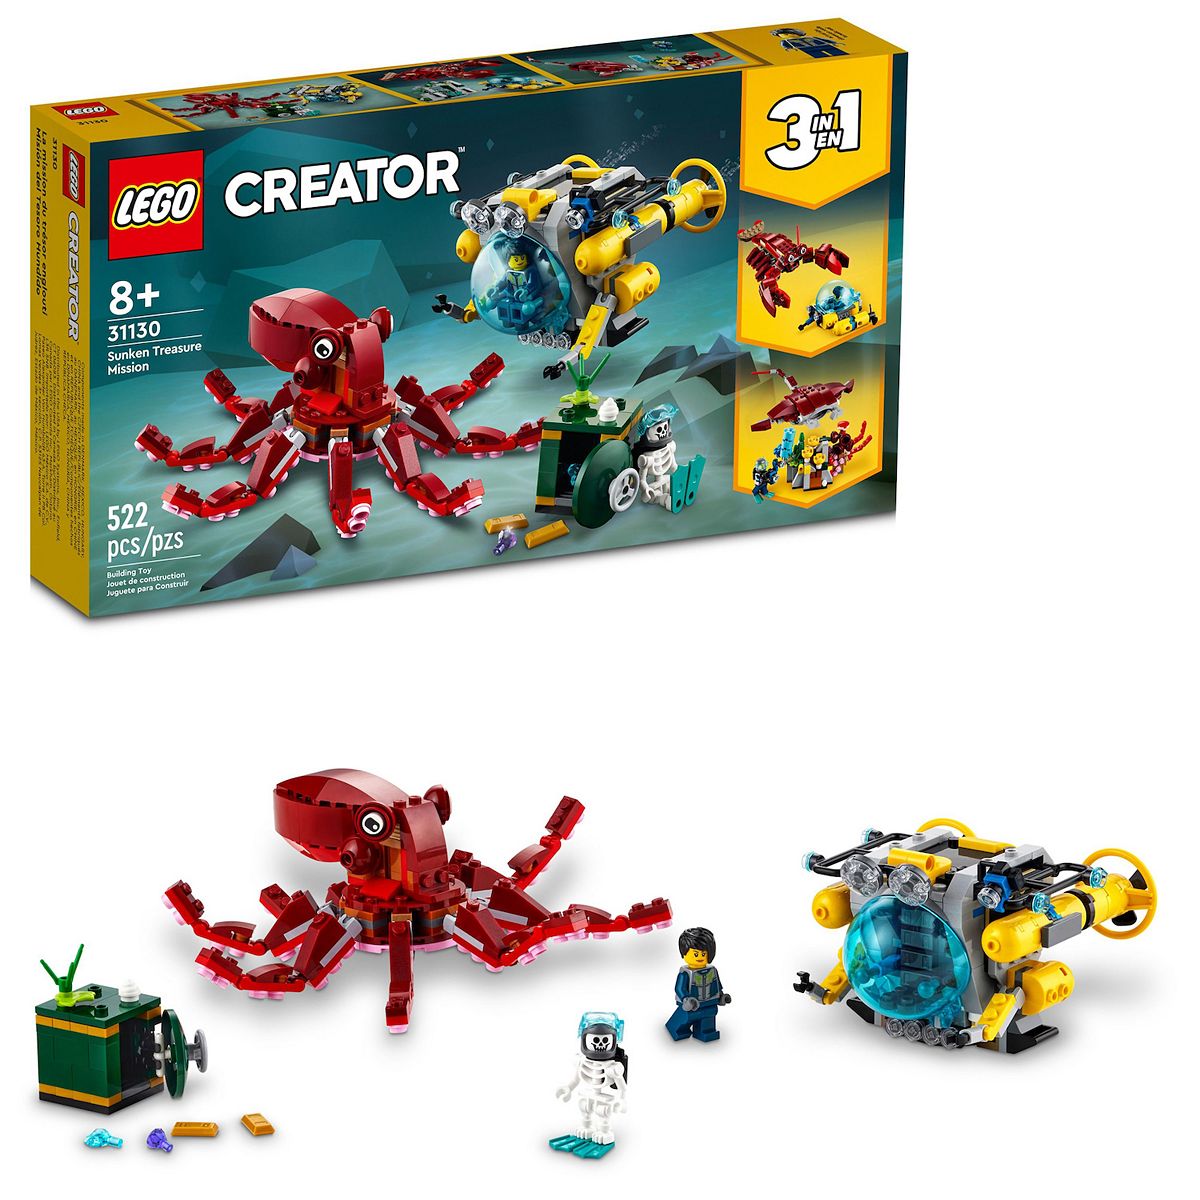 LEGO Creator Sunken Treasure Mission #31130